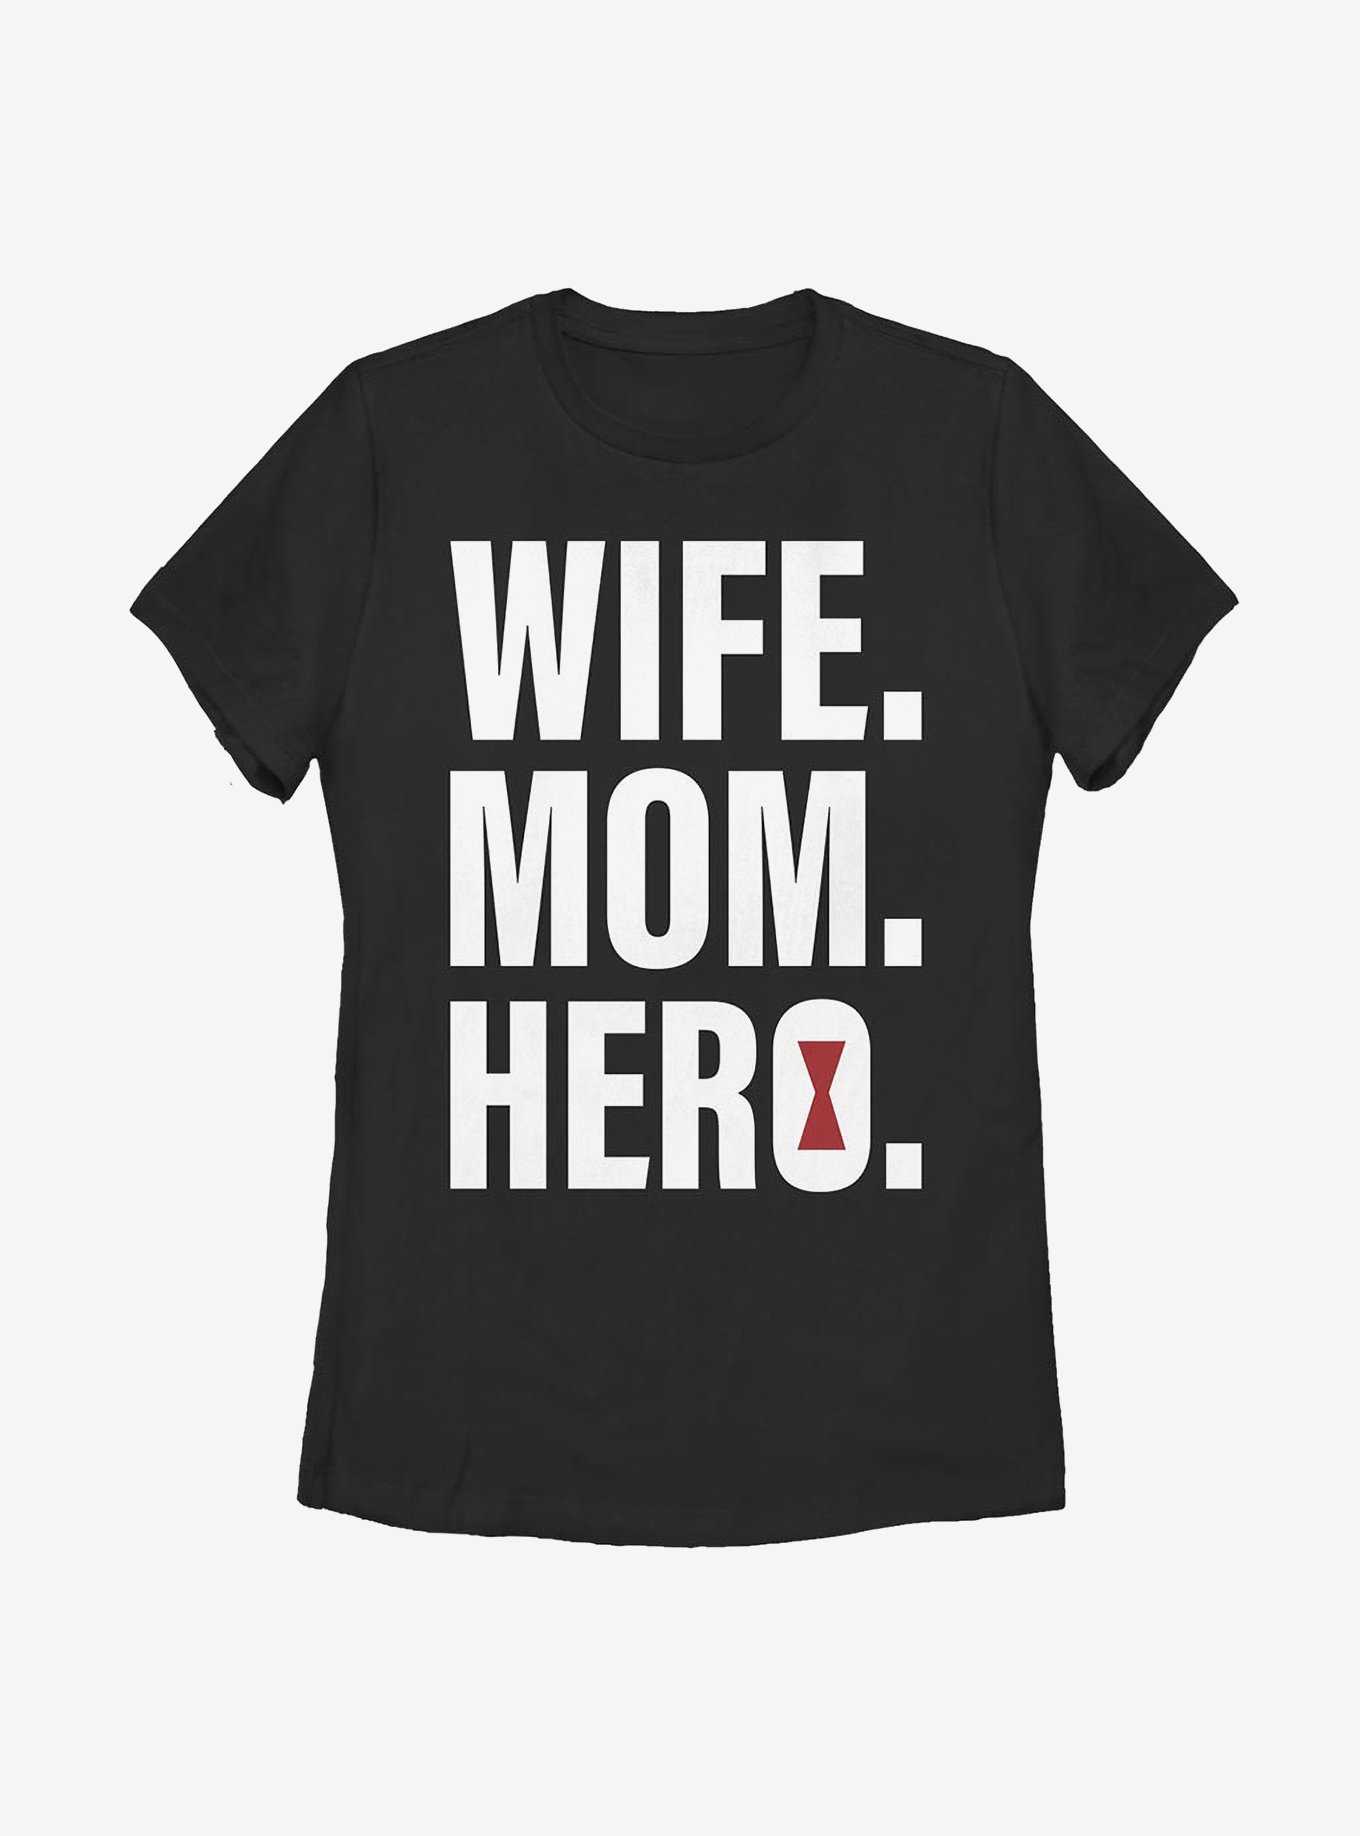 Marvel Black Widow Wife Mom Black Widow Womens T-Shirt, , hi-res